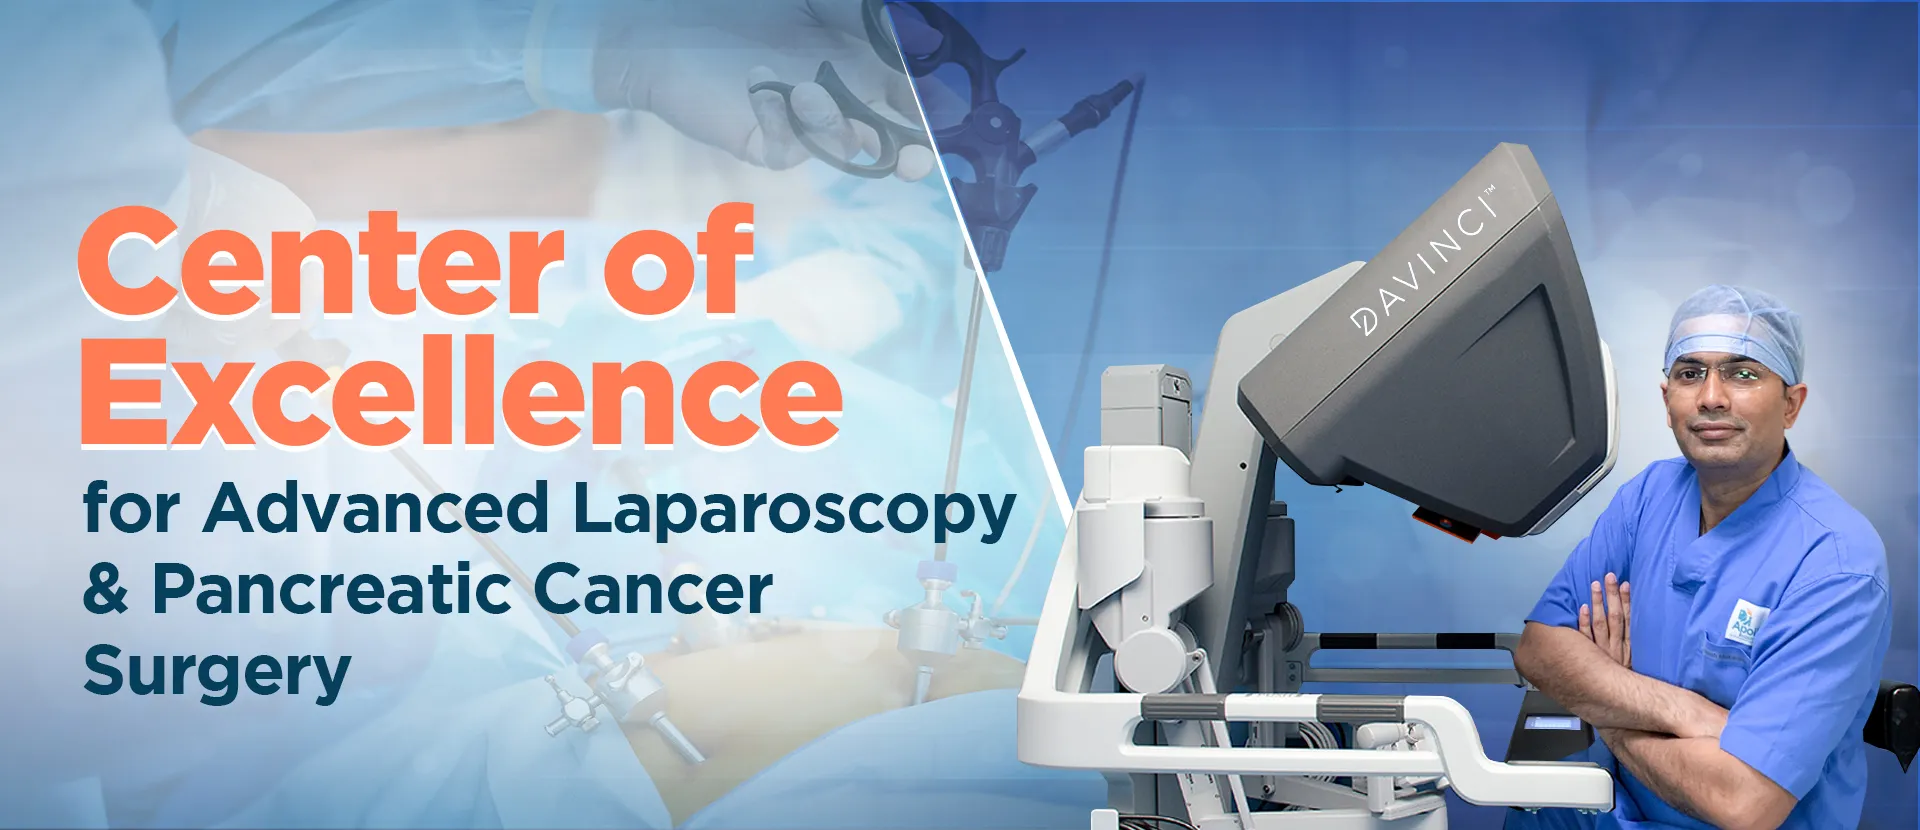 laparoscopy & pancreatic cancer surgery